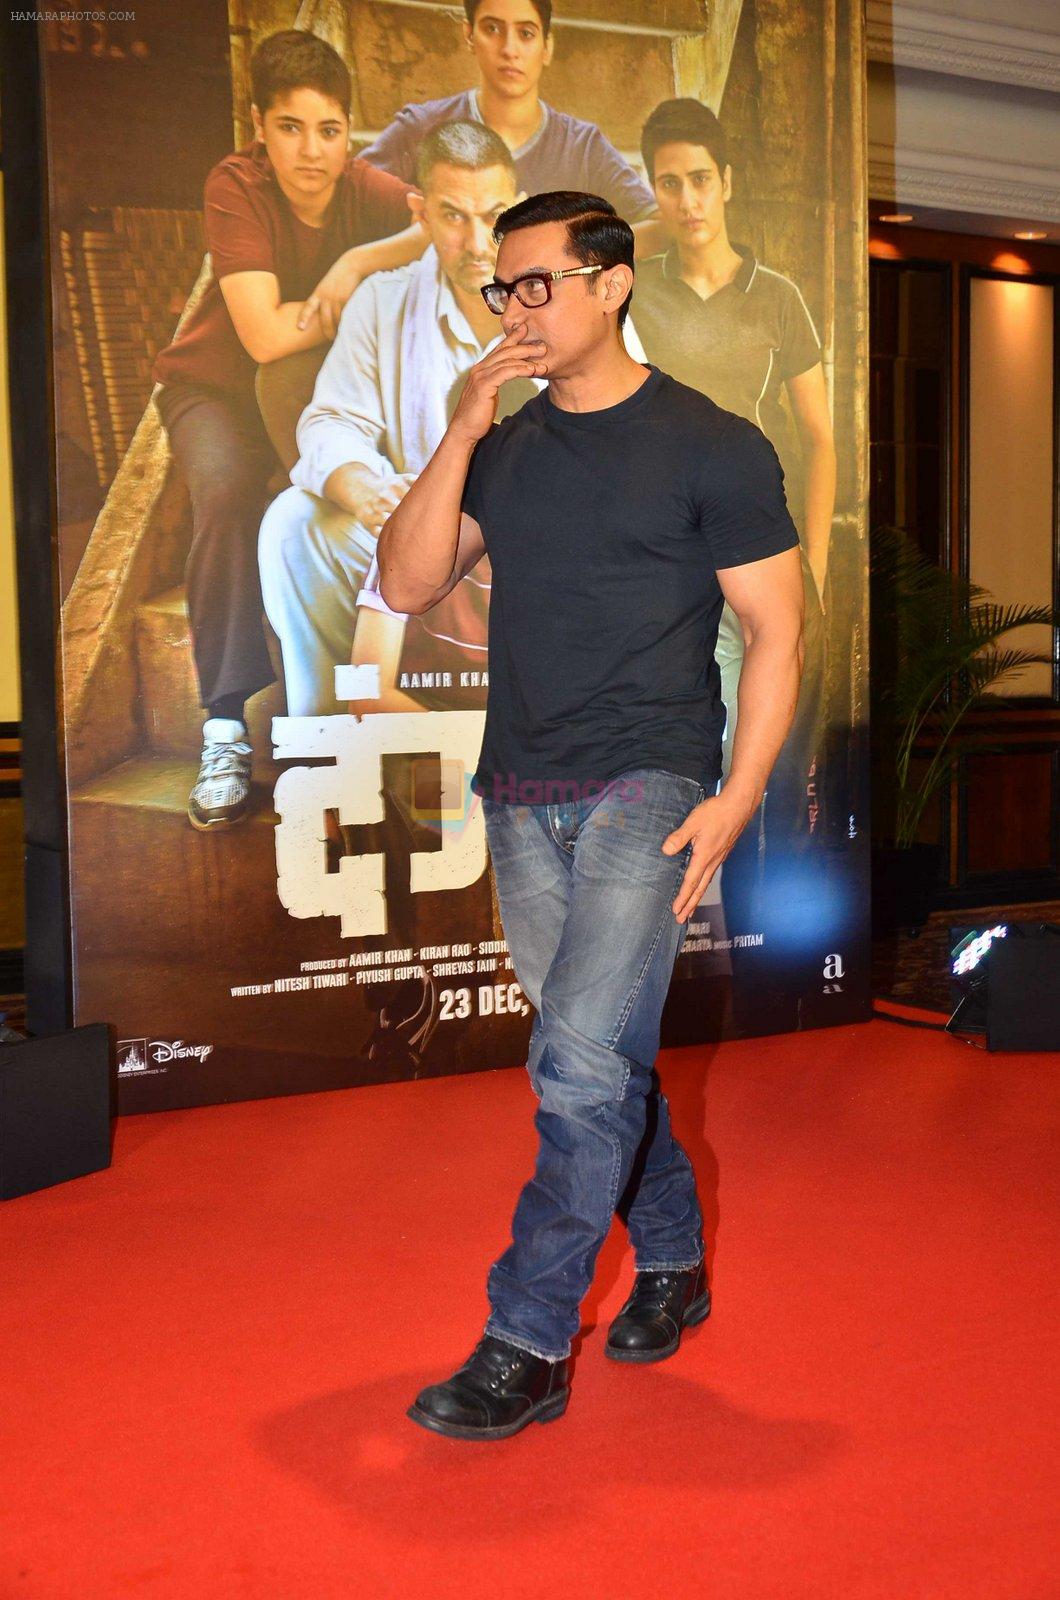 Aamir Khan at Dangal launch in Mumbai on 4th July 2016